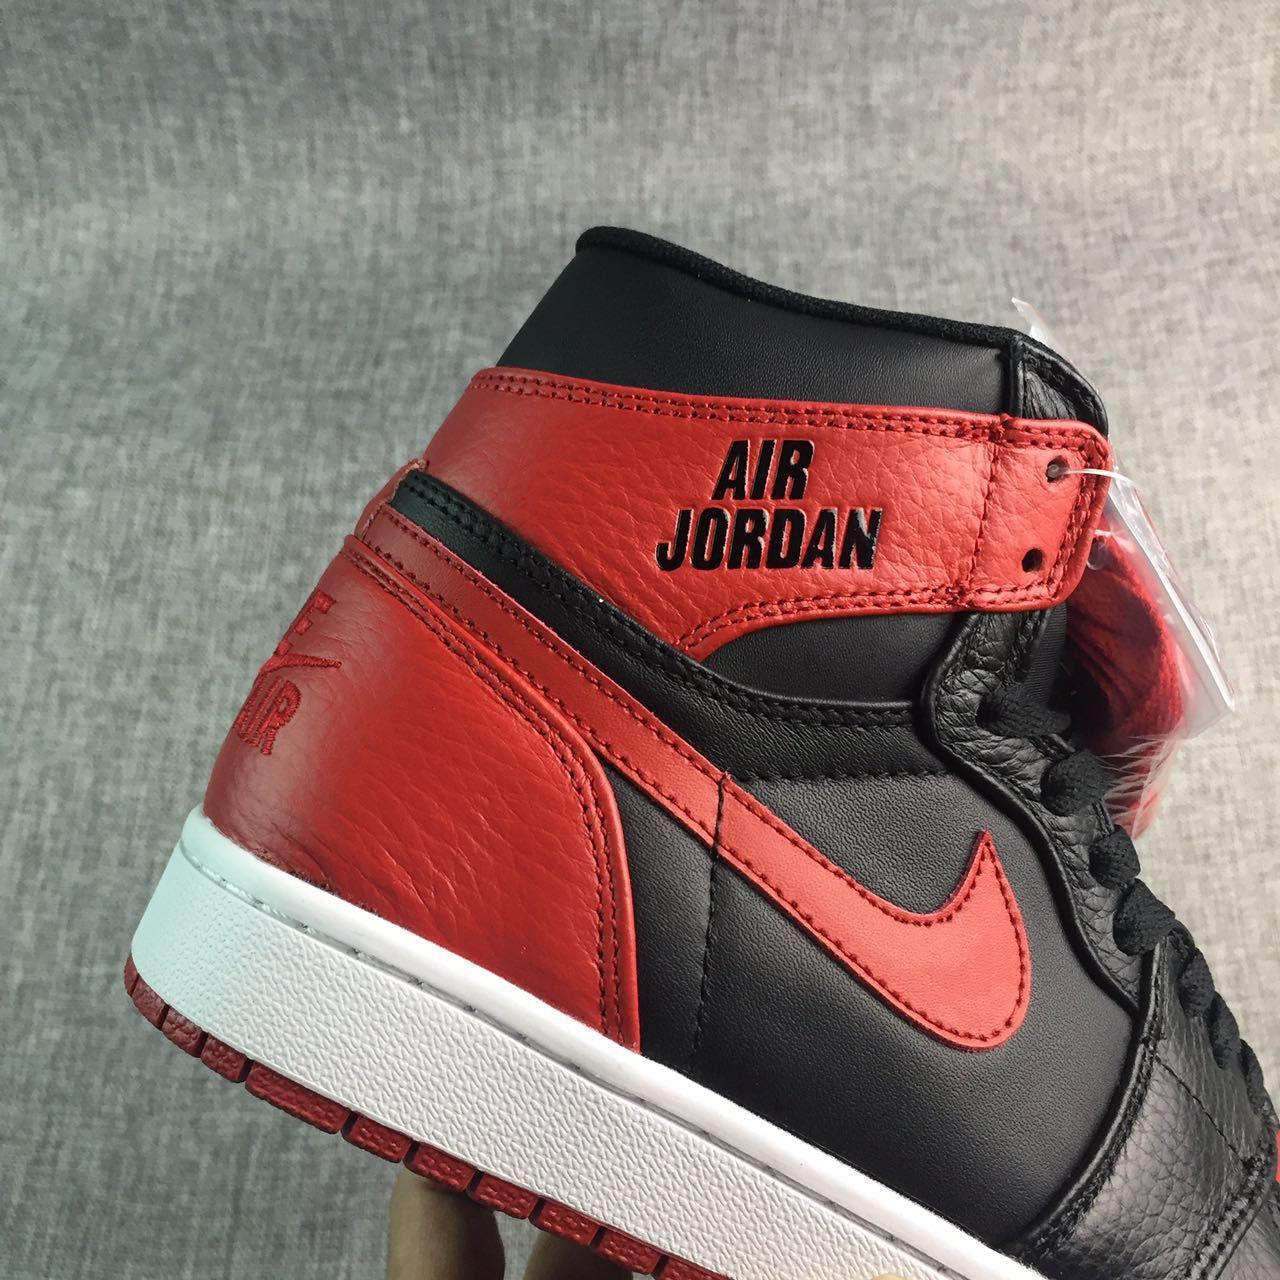 Air Jordan 1 Logo - Air Jordan 1 Nike Logo Black red | 23 red/black | Pinterest ...